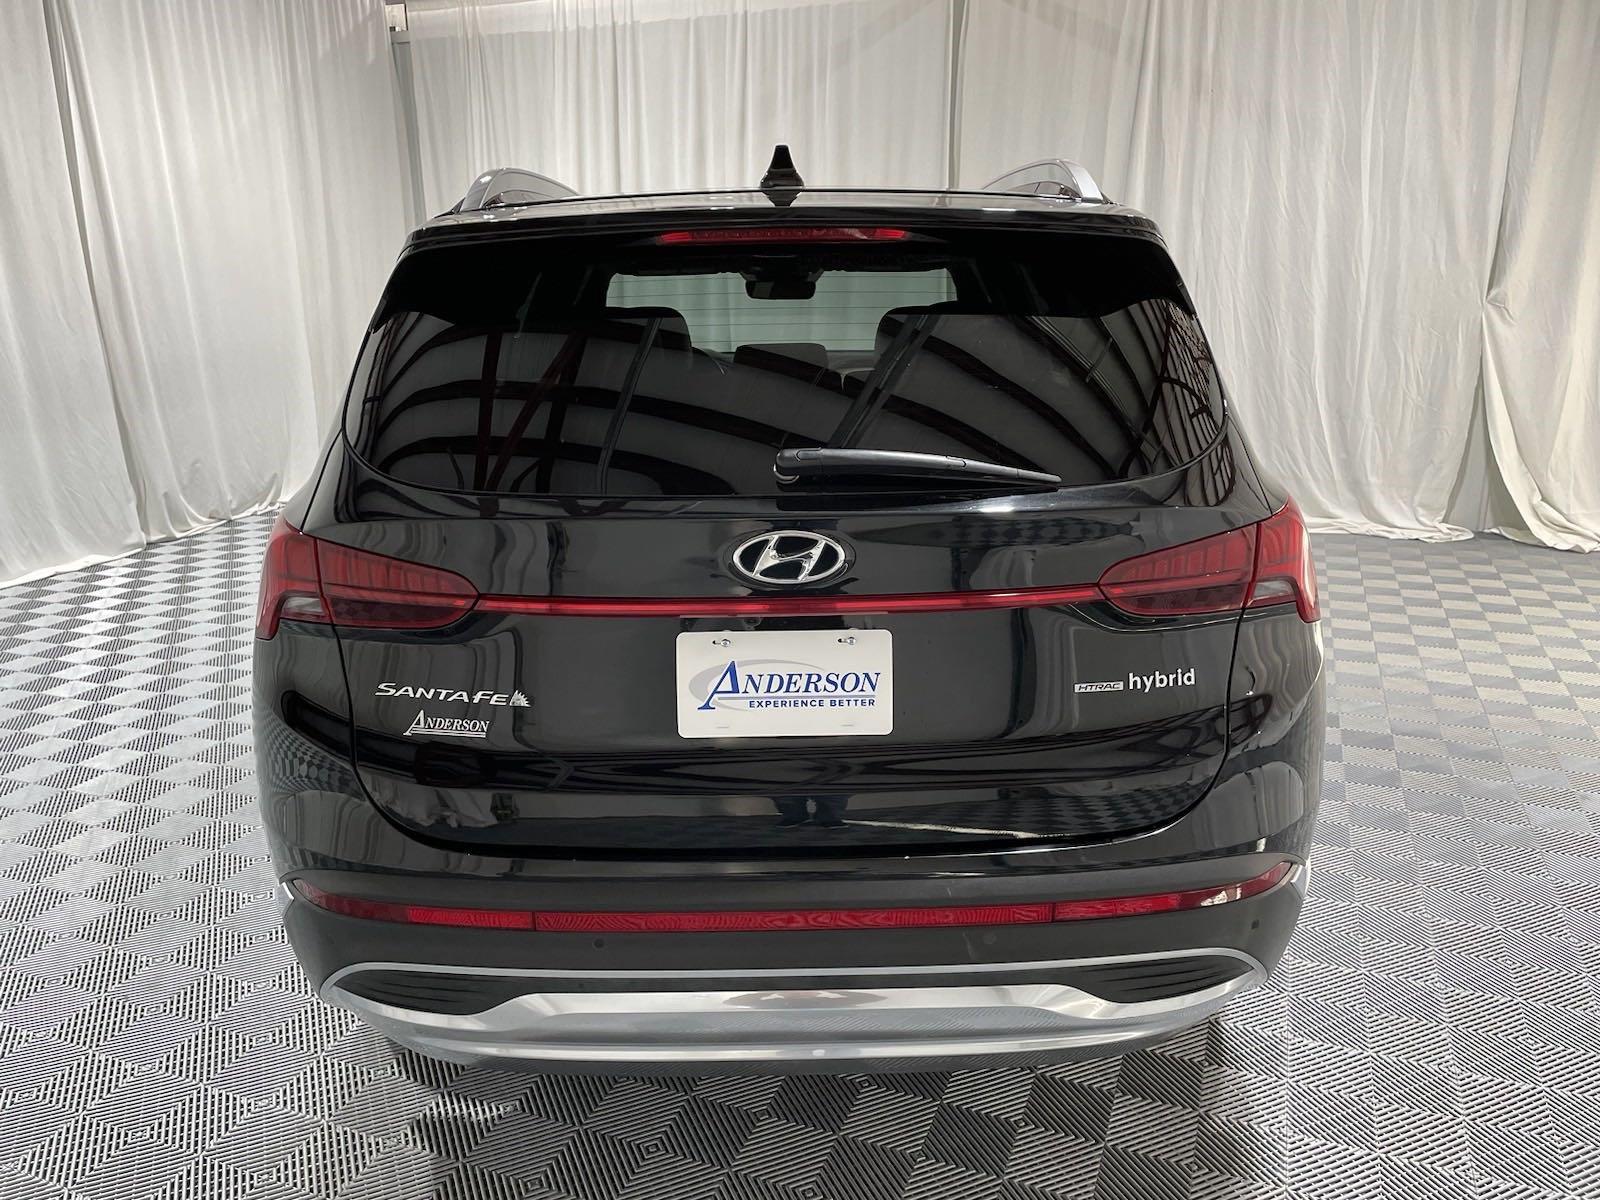 Used 2023 Hyundai Santa Fe Hybrid SEL Premium SUV for sale in St Joseph MO